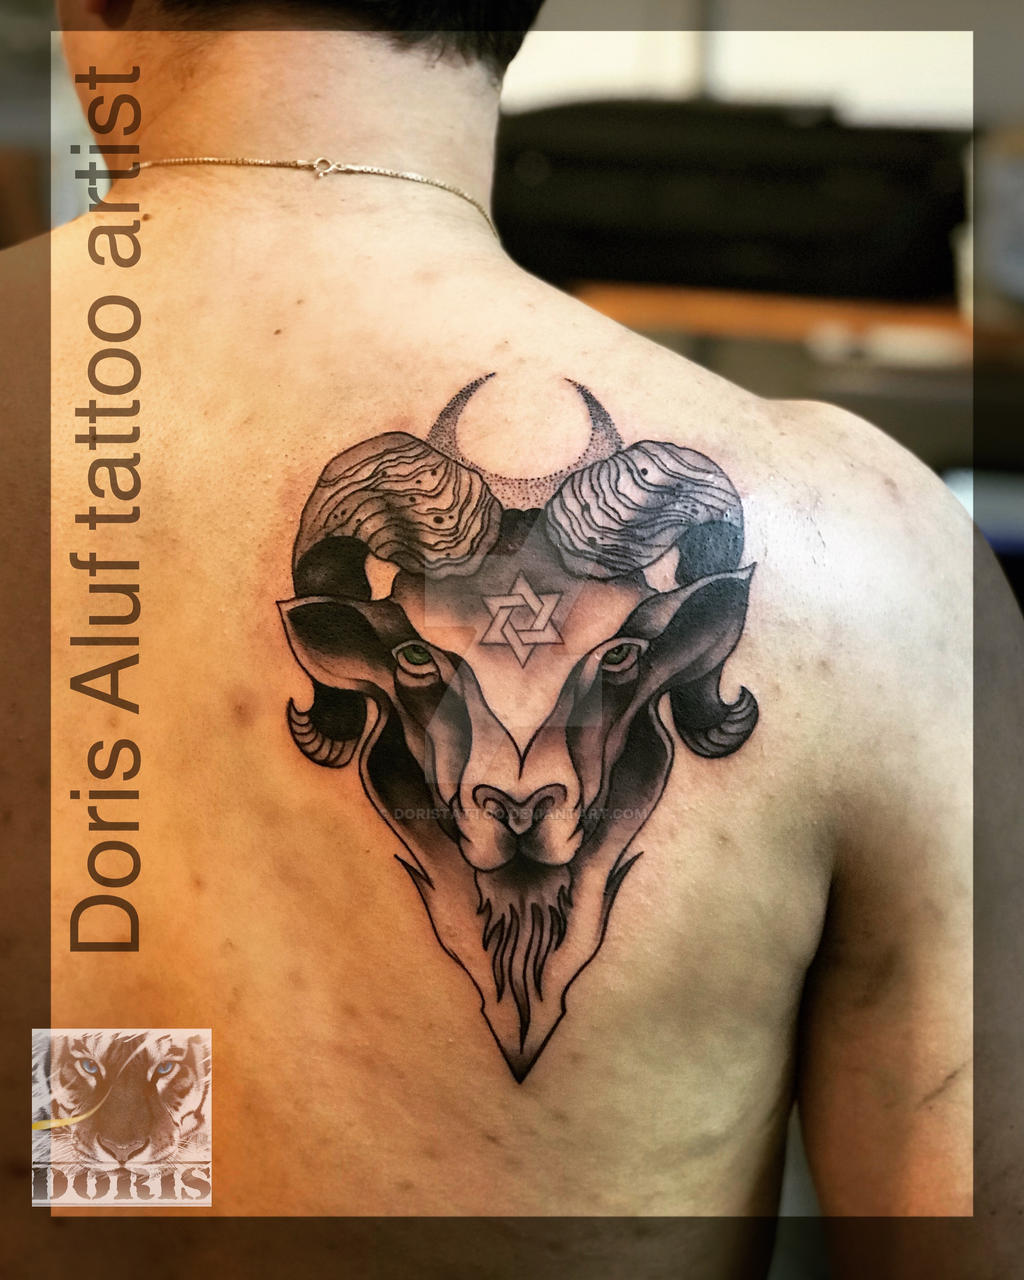 Capricorn back tattoo by doristattoo on DeviantArt